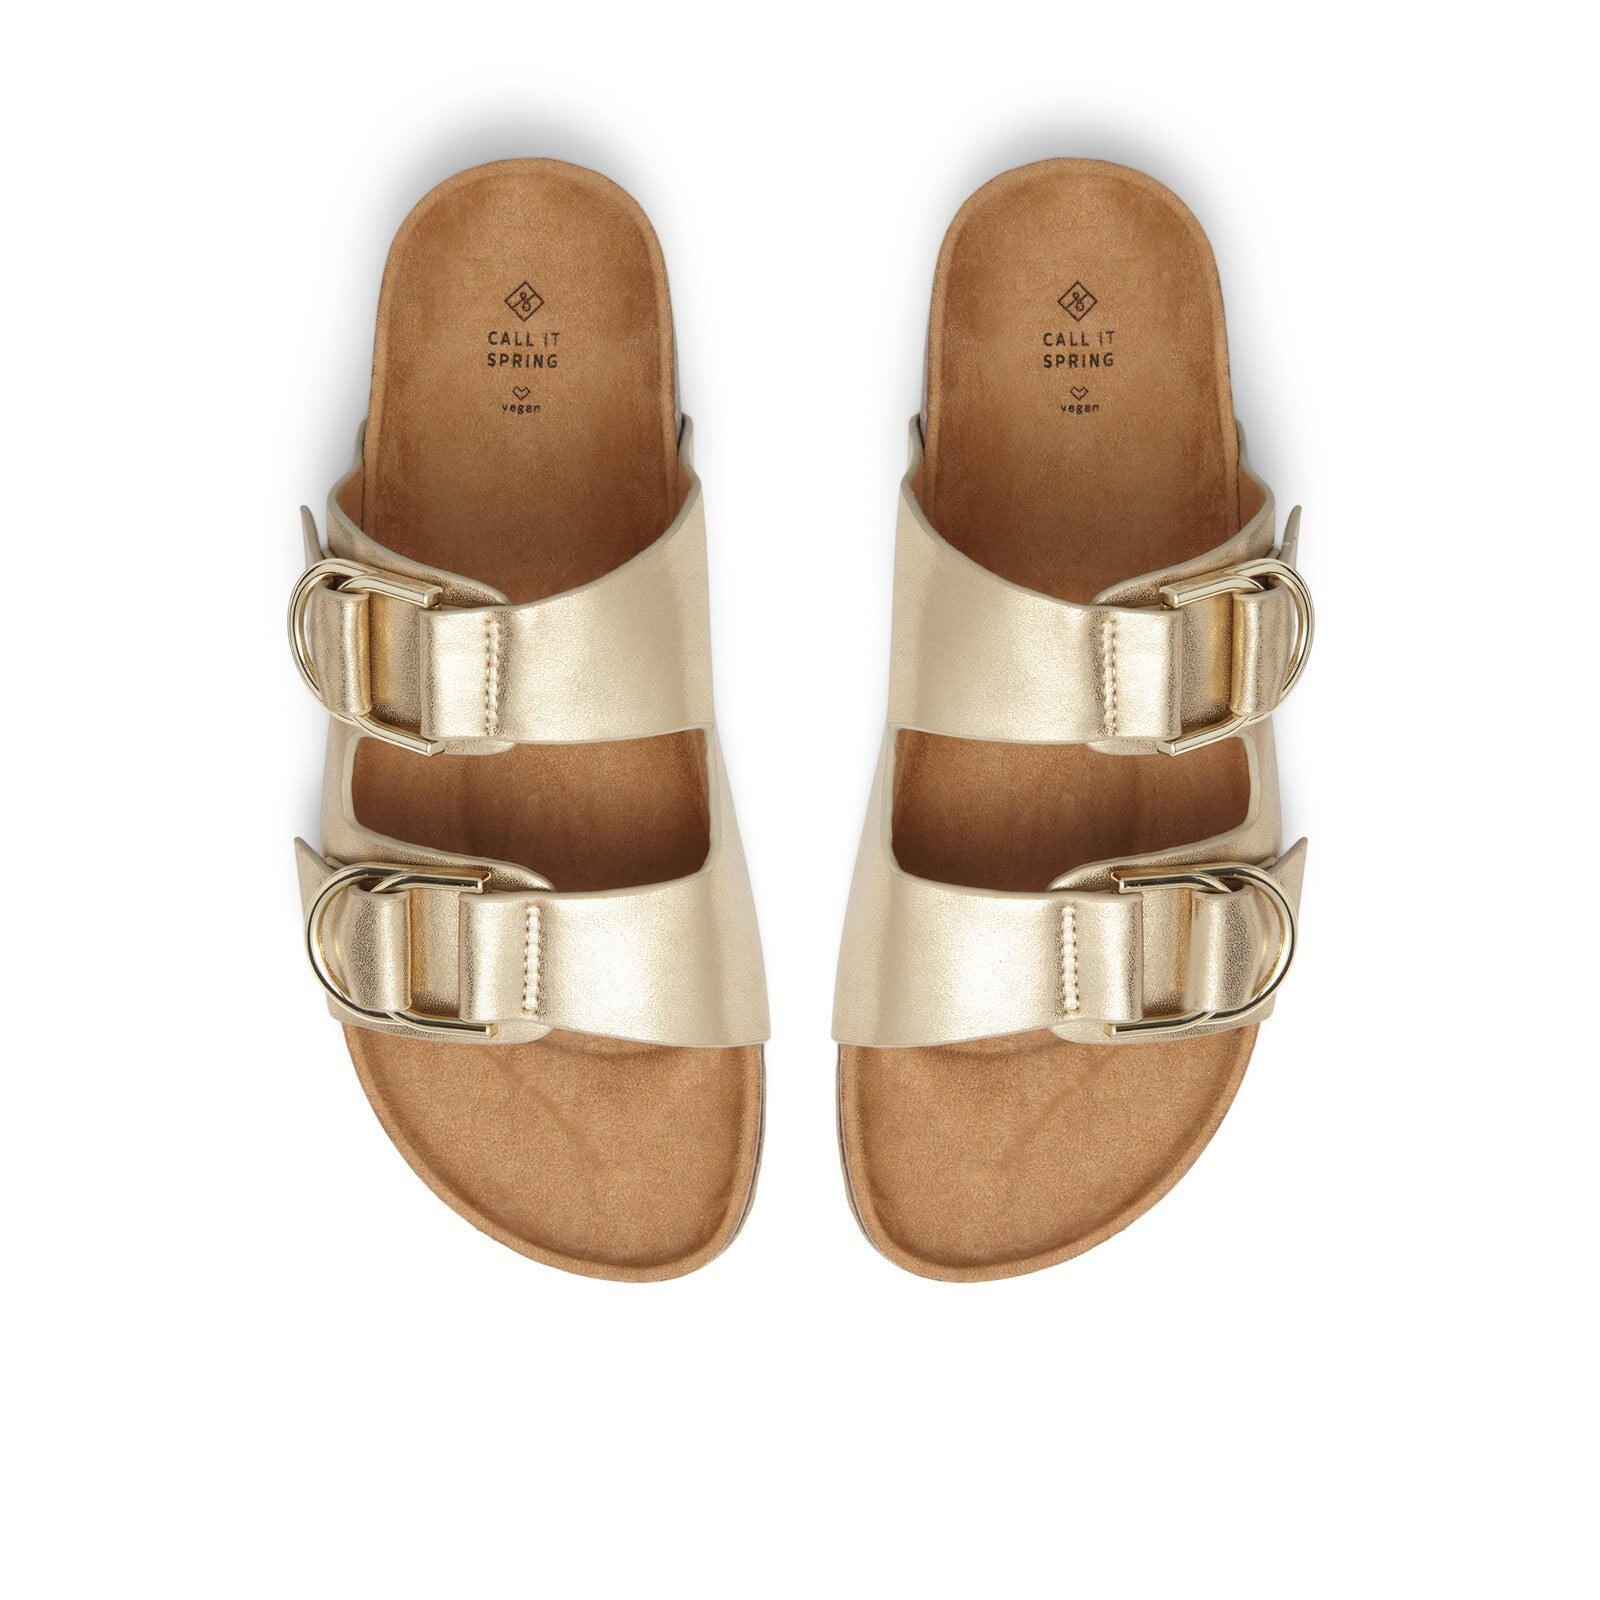 Firewia Women Shoes - Gold - CALL IT SPRING KSA